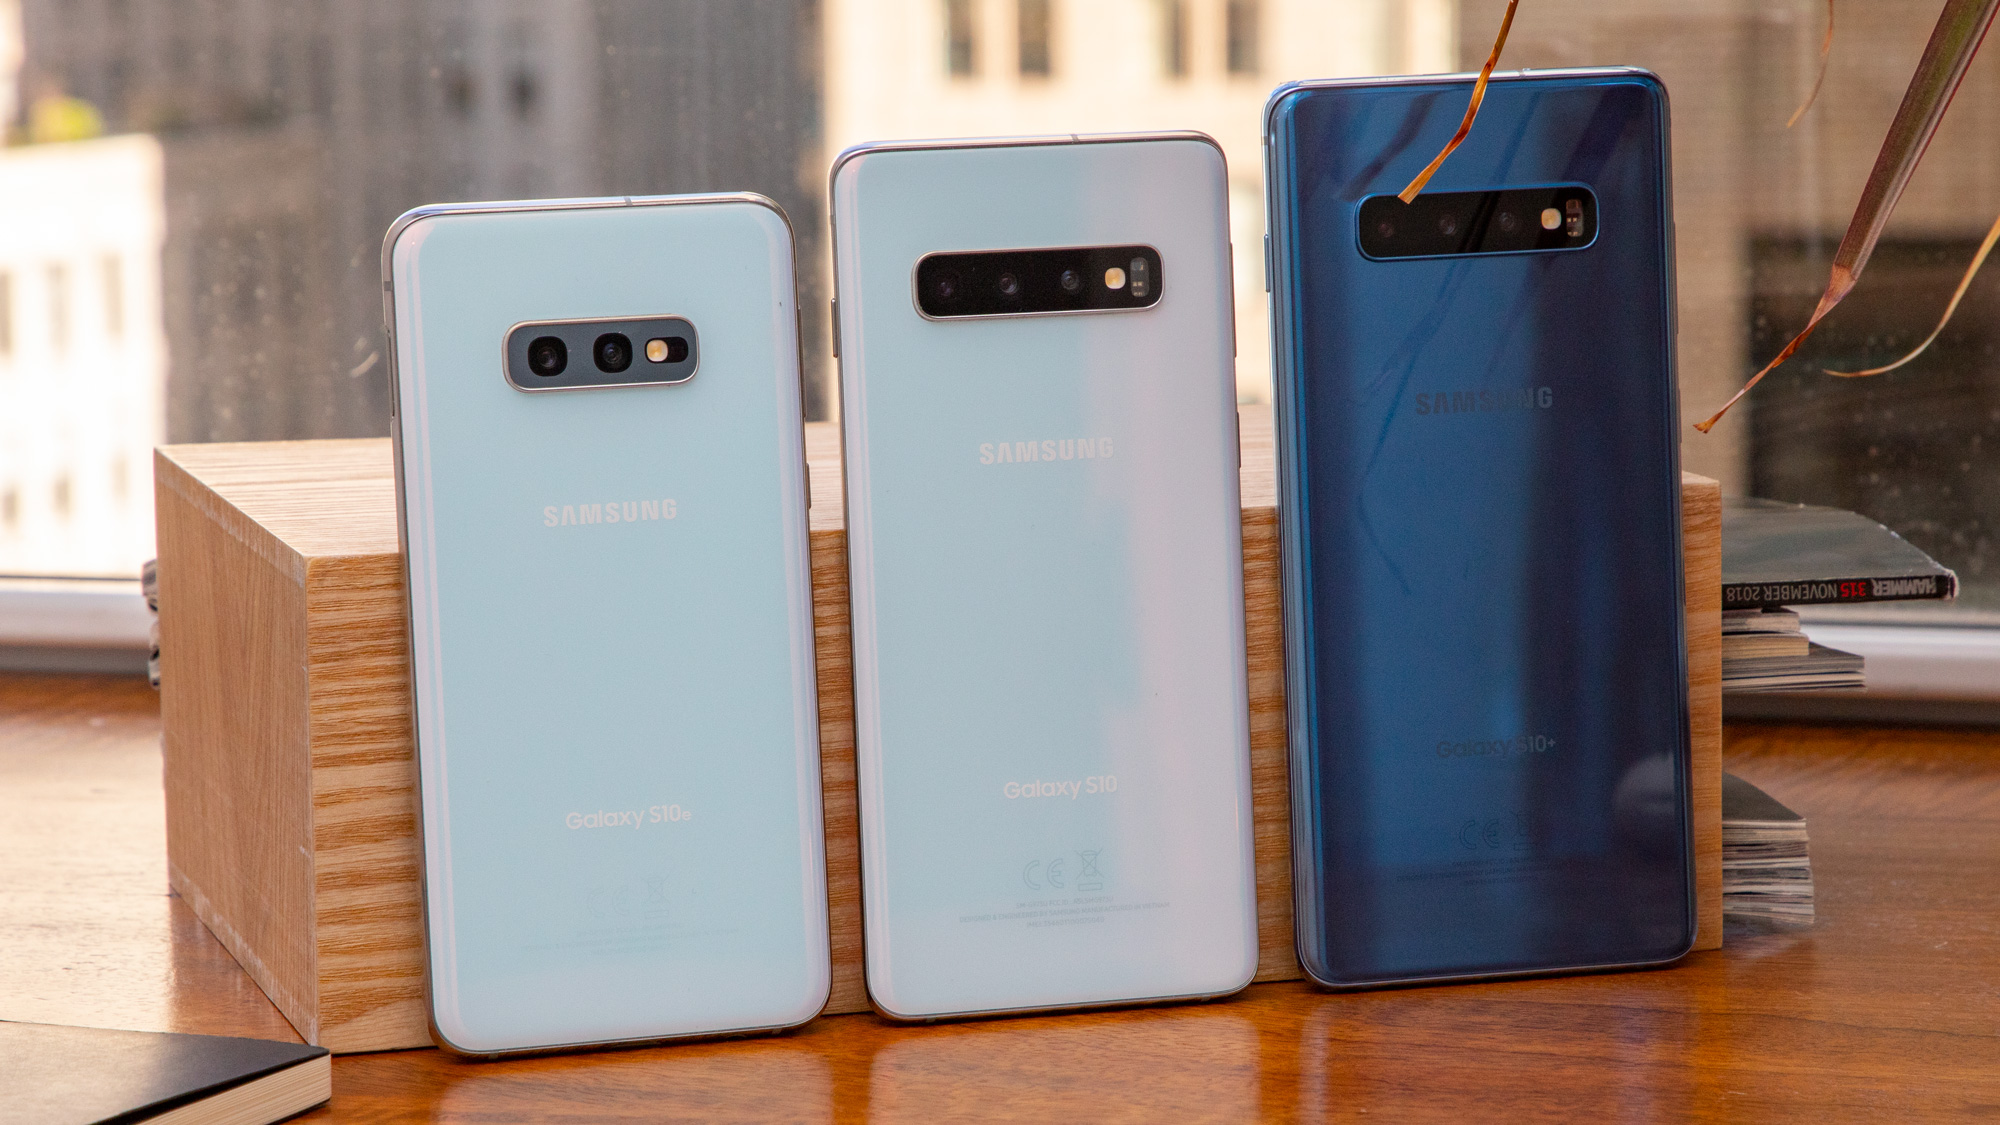 Samsung Galaxy S10 models